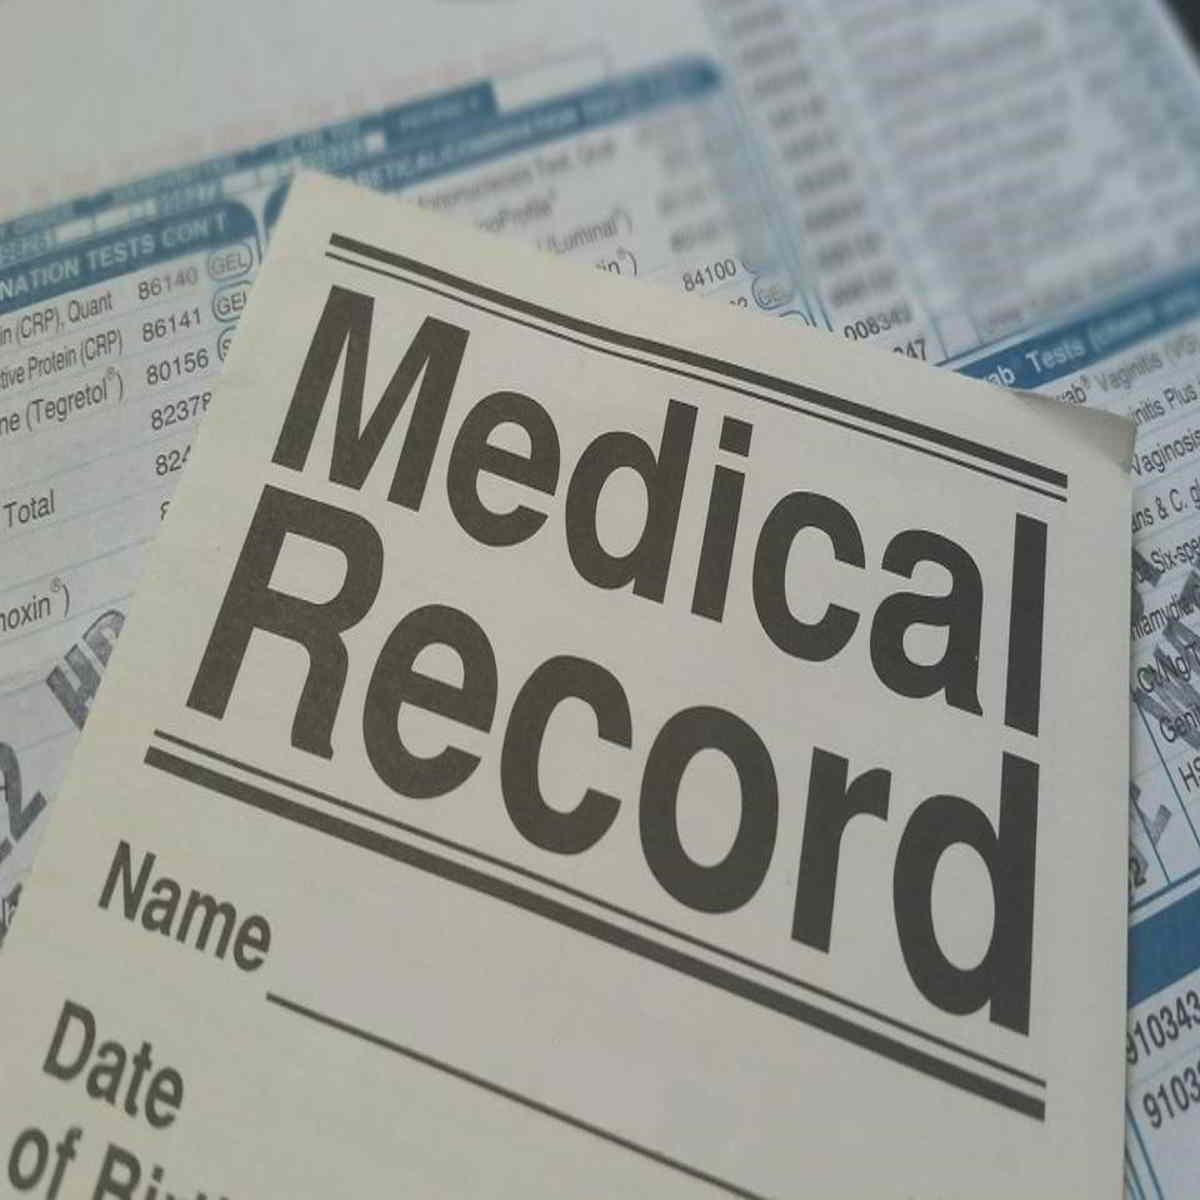 Is health records marketable in Kenya